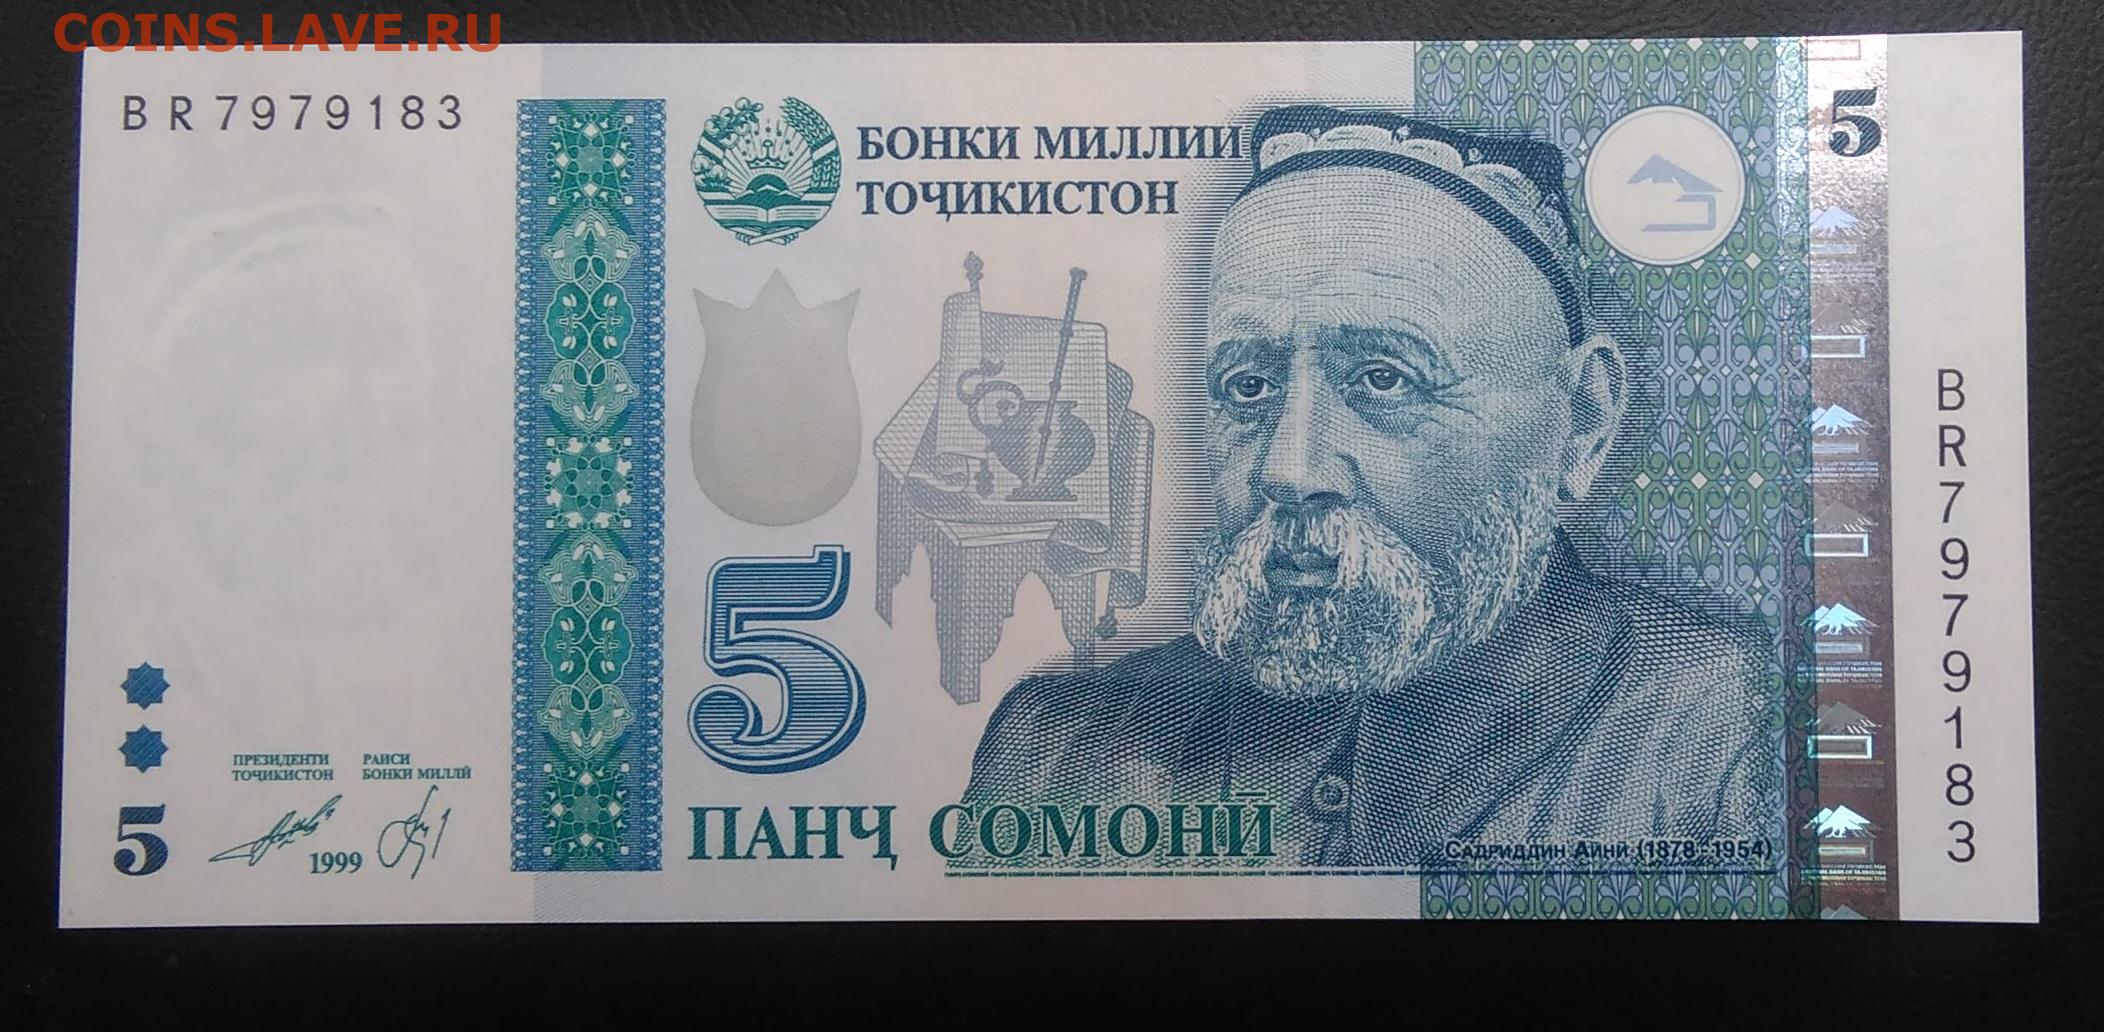 2500 рублей в сомони. Банкноты Таджикистана: 5 Сомони. Купюры Таджикистана 1000 Сомони. Банкнота 10 Сомони 1999 год Таджикистан. Купюра Таджикистана 500 Сомони.